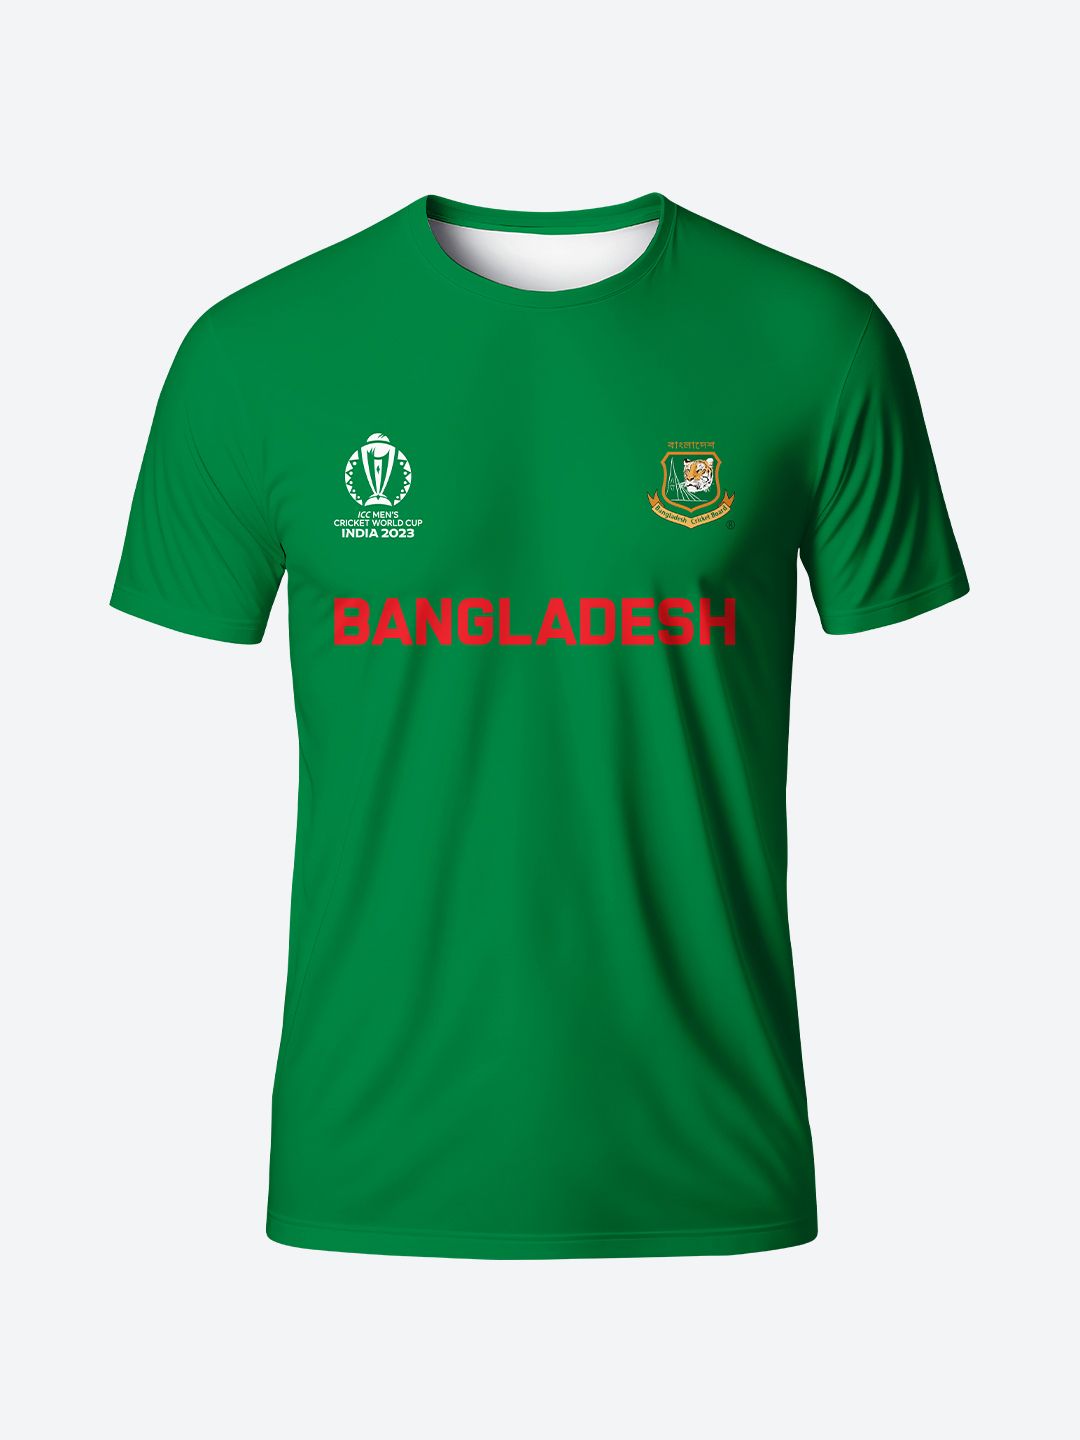 bangladesh Merchandise: Buy Official bangladesh Jerseys & T Shirts ...